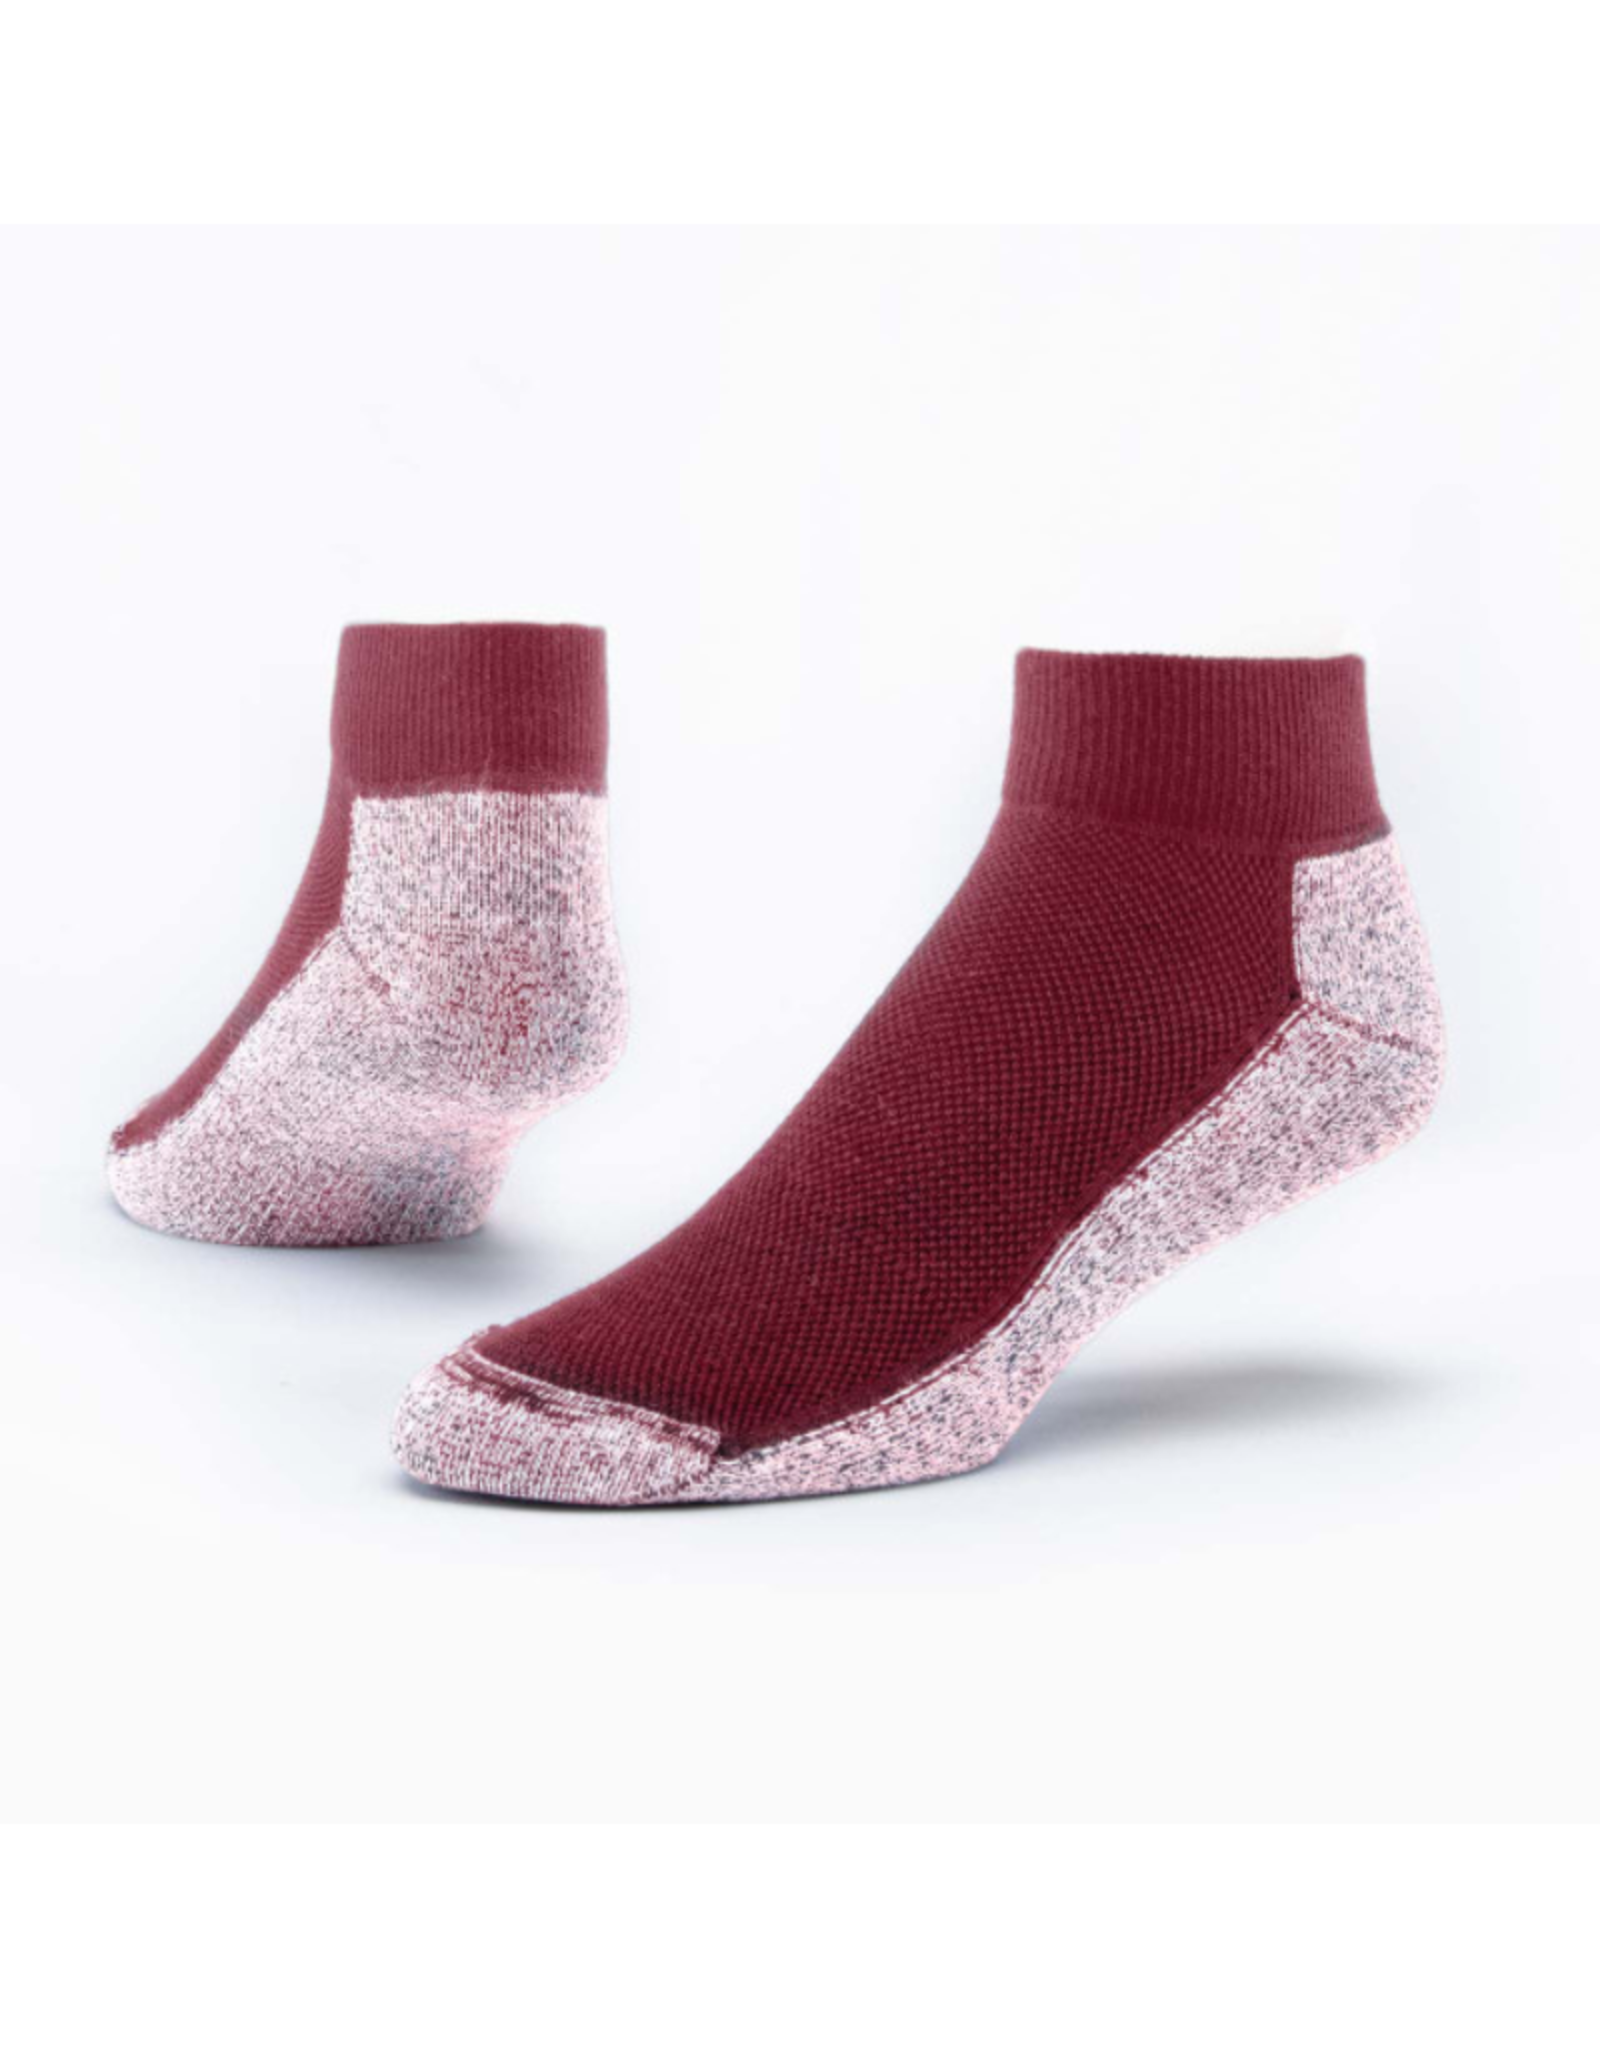 Maggie's Organics Sport Socks Ankle (Raspberry)